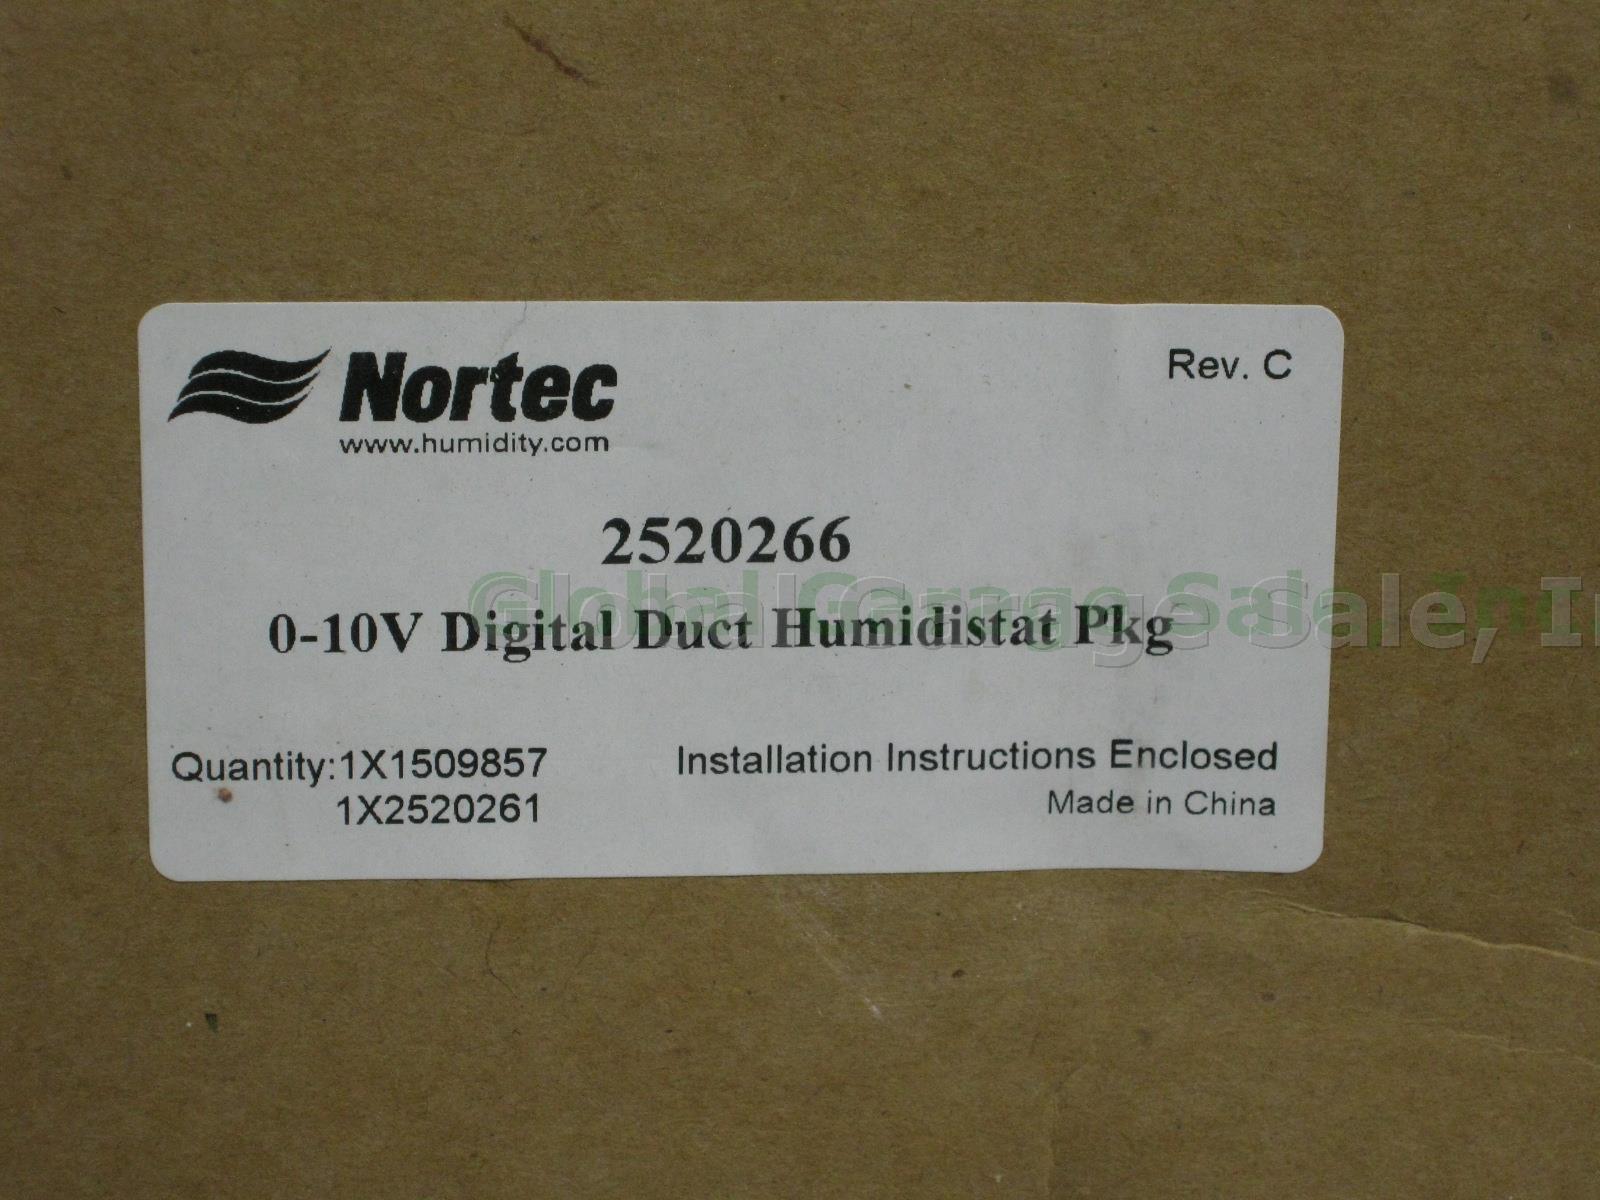 New Nortec 252-0266 0-10V Digital Modulating Duct Mount Humidistat Pkg Rev C NR! 5